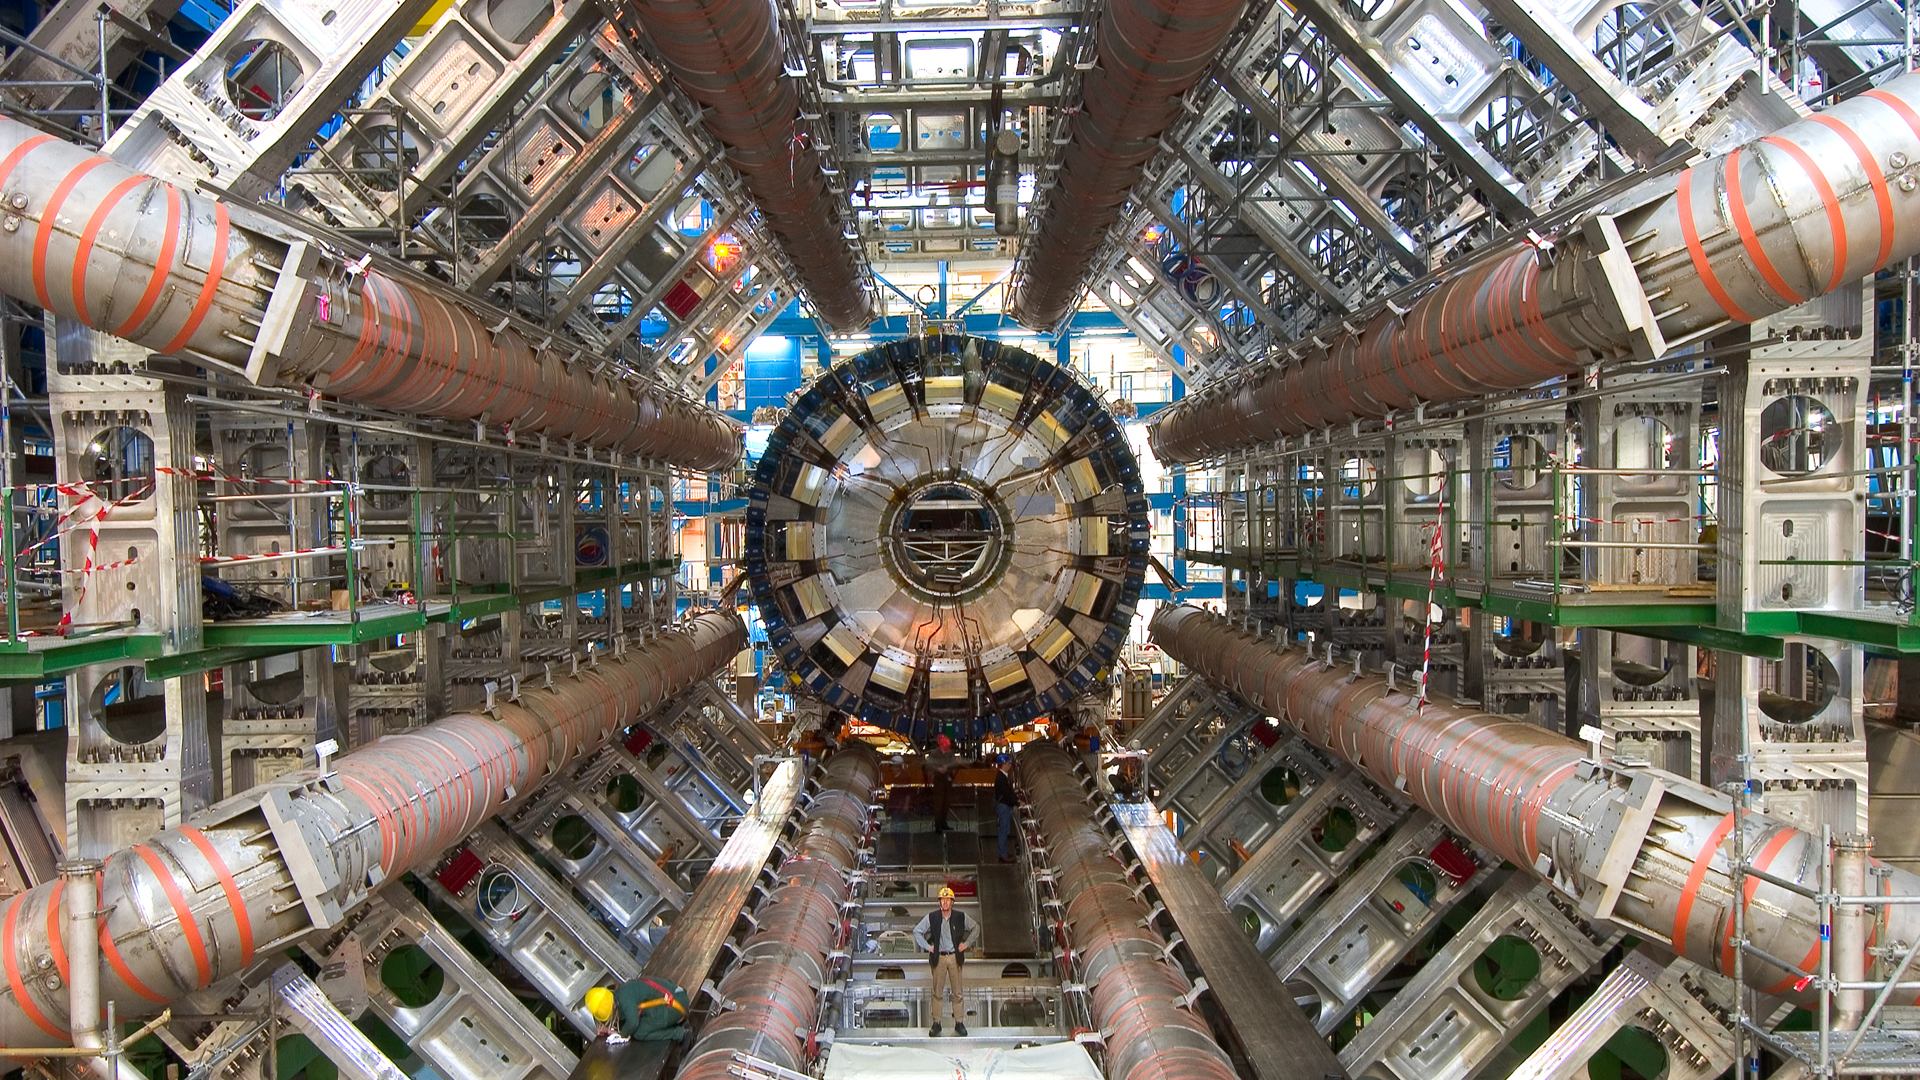 More information about "Επαναλειτουργεί μετά από δύο χρόνια το CERN"